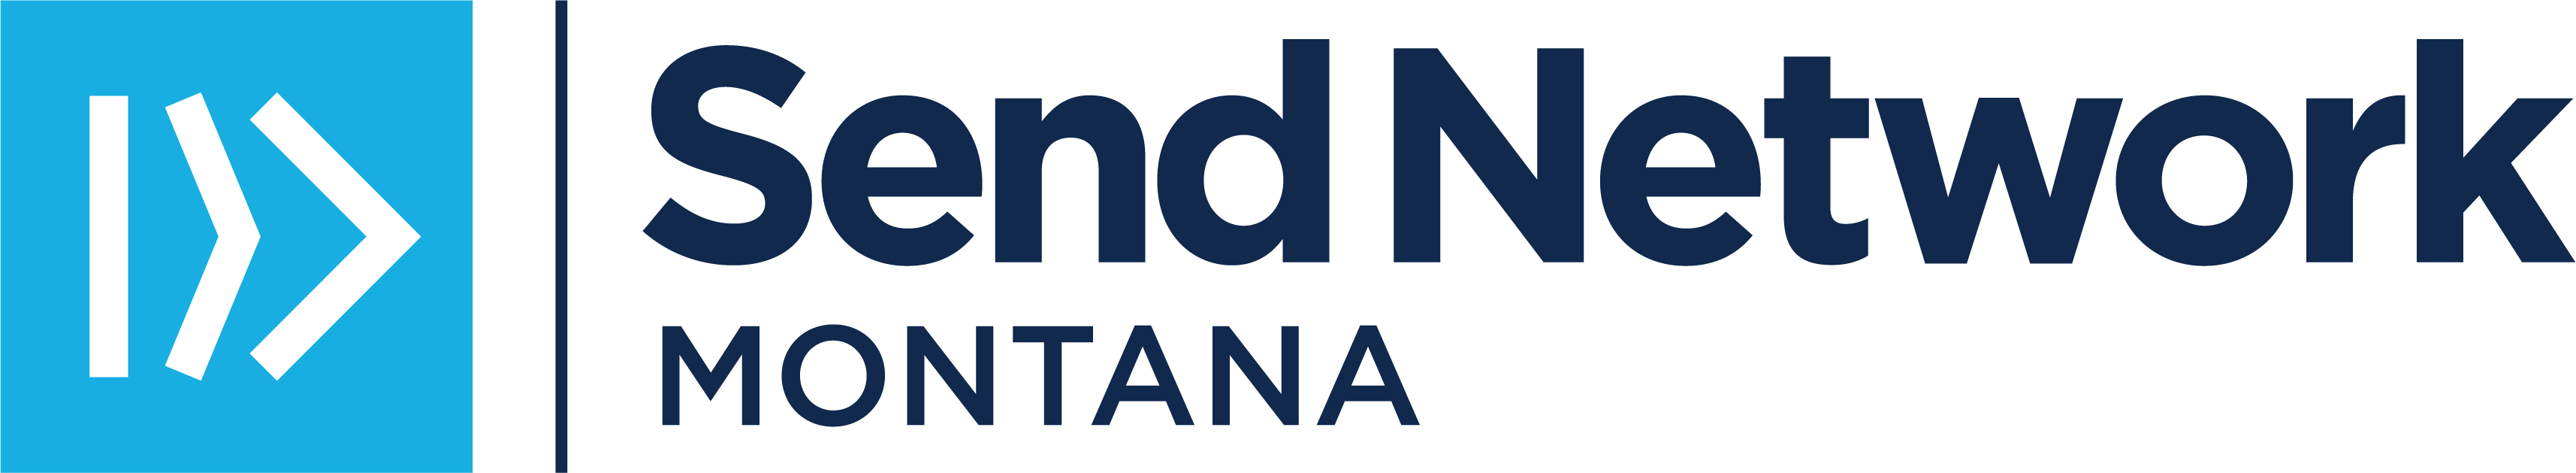 SN Montana Logo_BlueNavy